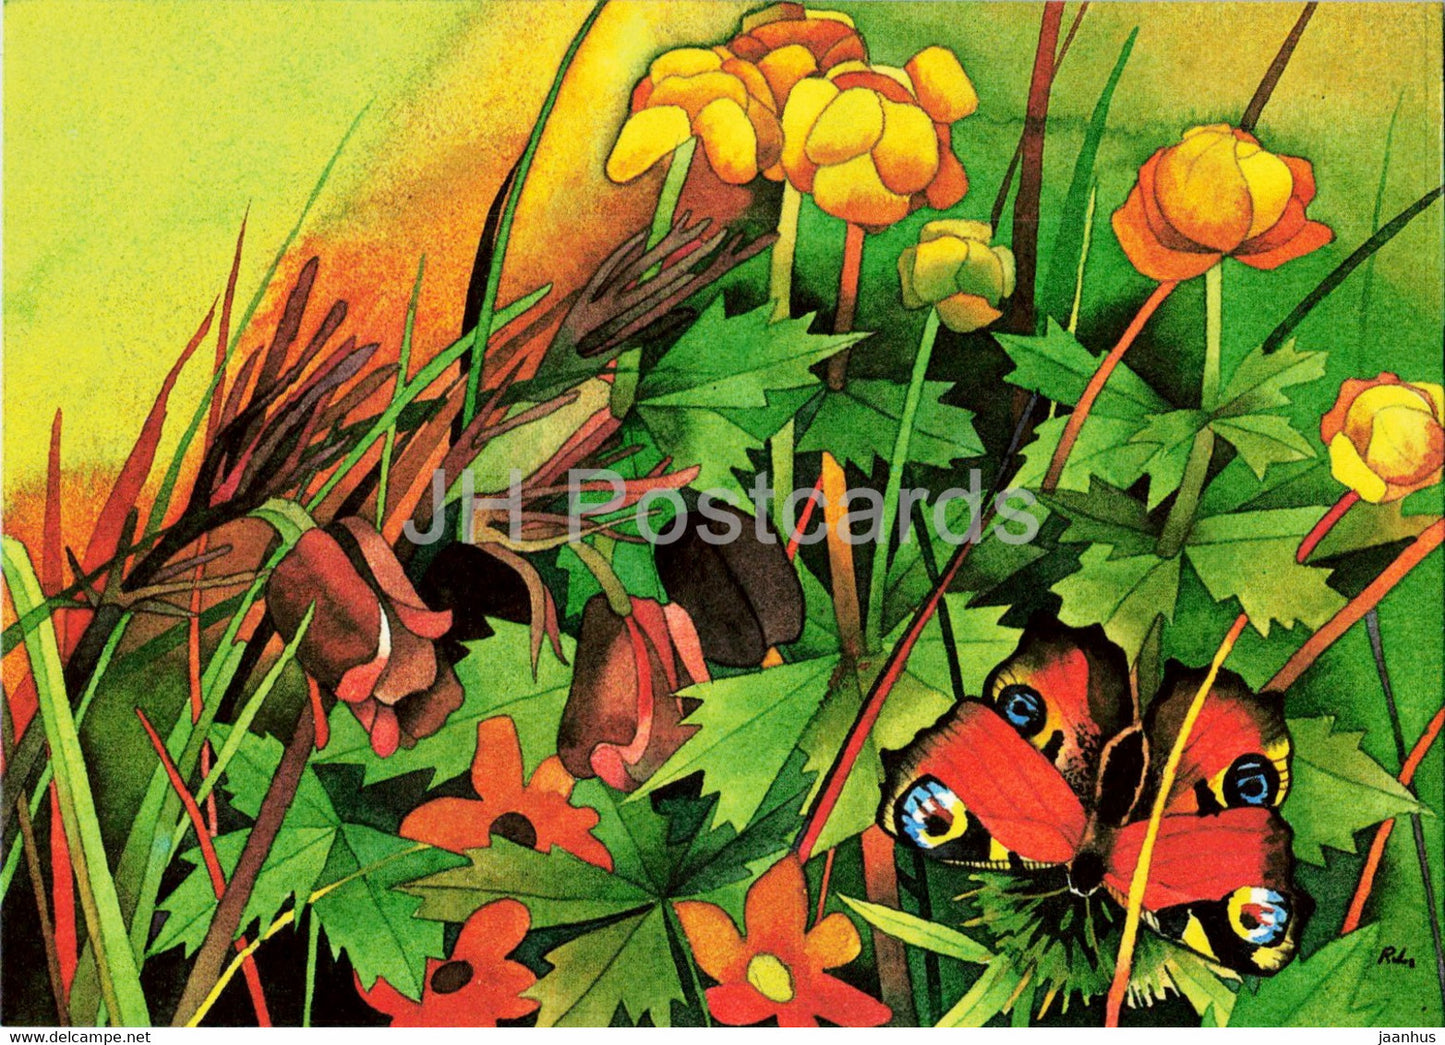 Greeting Card - by R. Lukk - butterfly - globe flower - flowers - 1985 - Estonia USSR - unused - JH Postcards